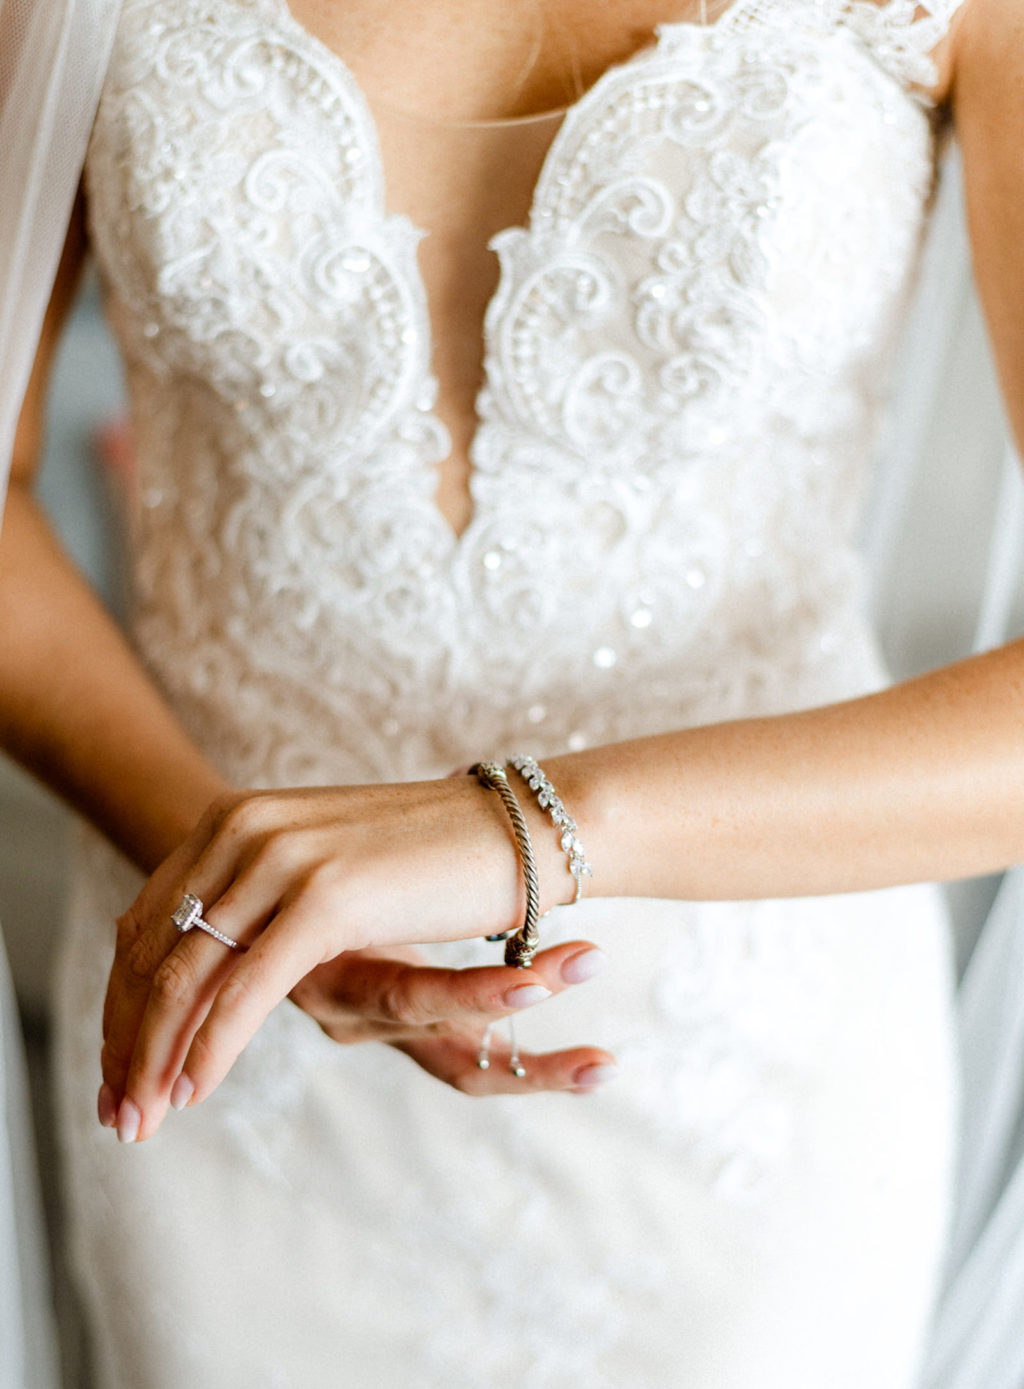 Lace Detail Plunge Wedding dress with Delicate Bracelet Details | Dress: Wtoo Charisma Wedding Dress